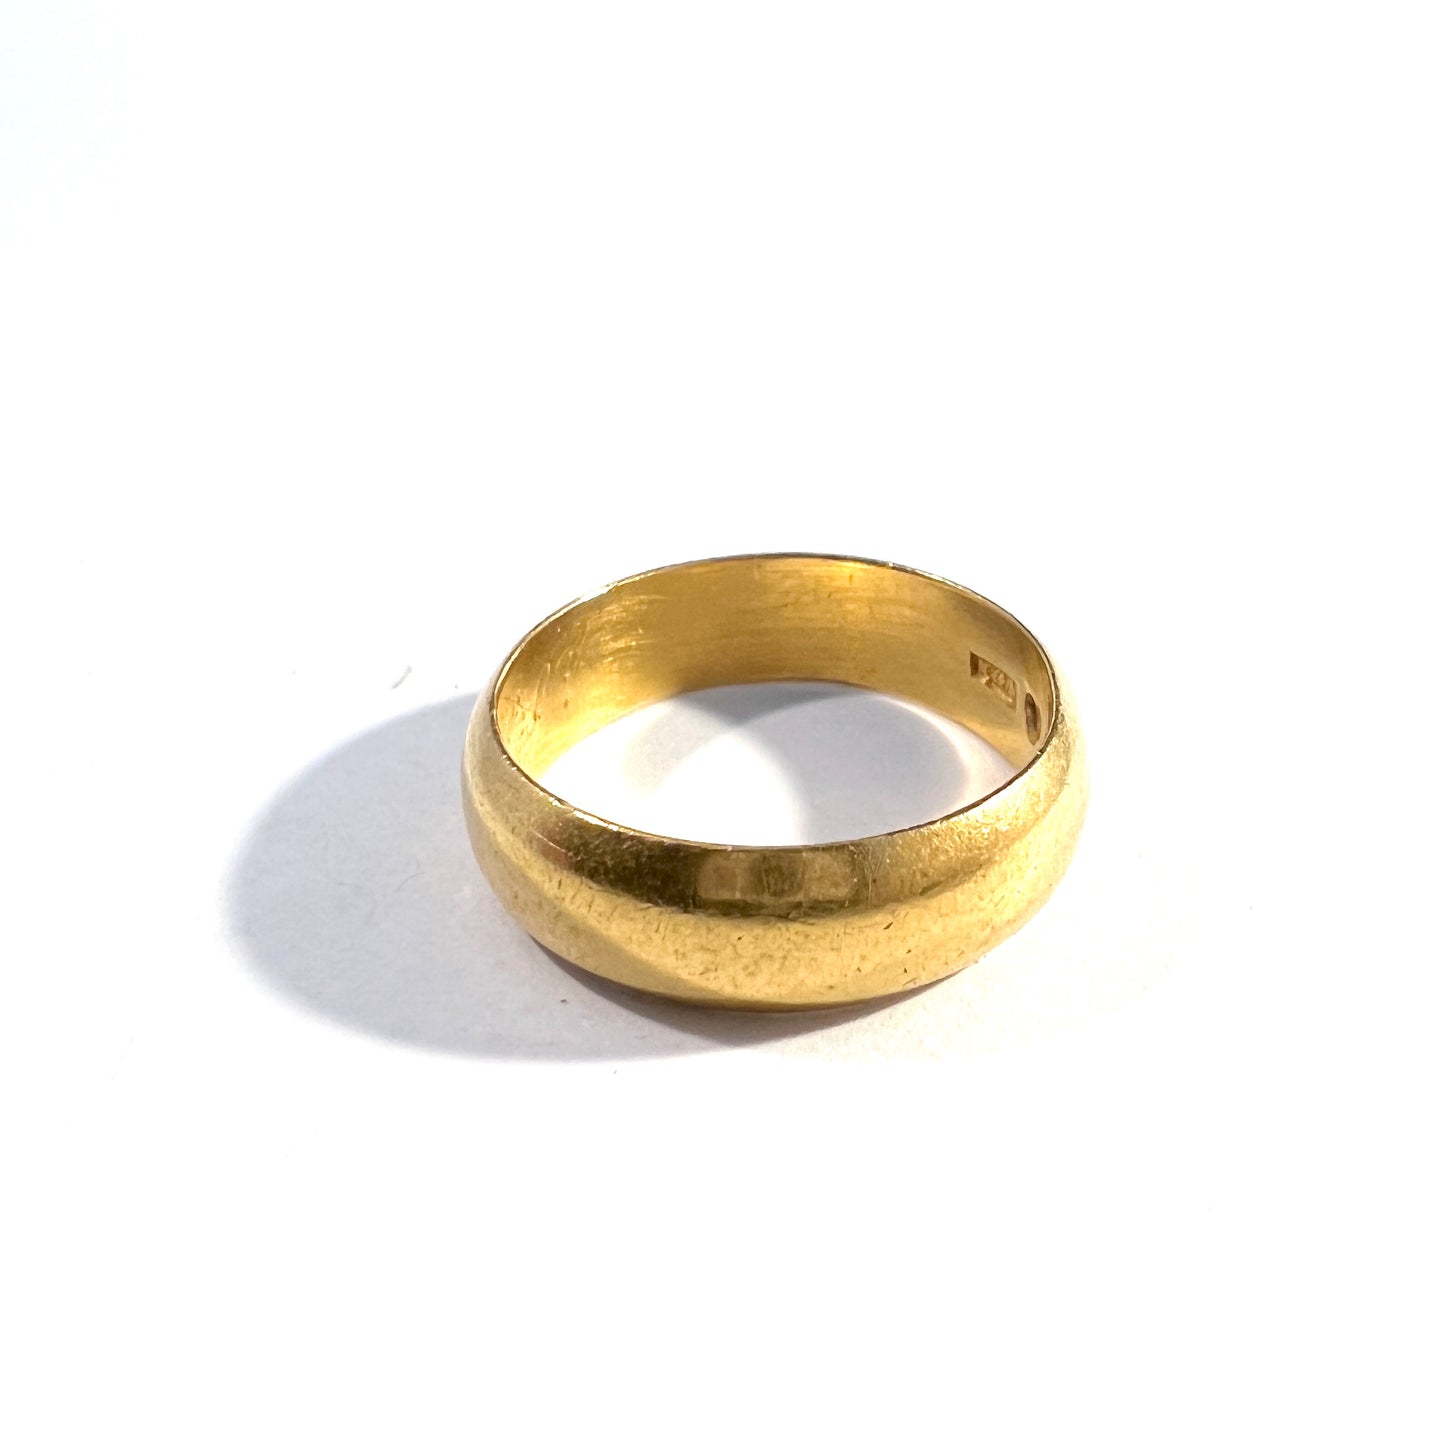 Markström, Sweden year 1907. Antique Chunky 23k Gold Wedding Band Ring.